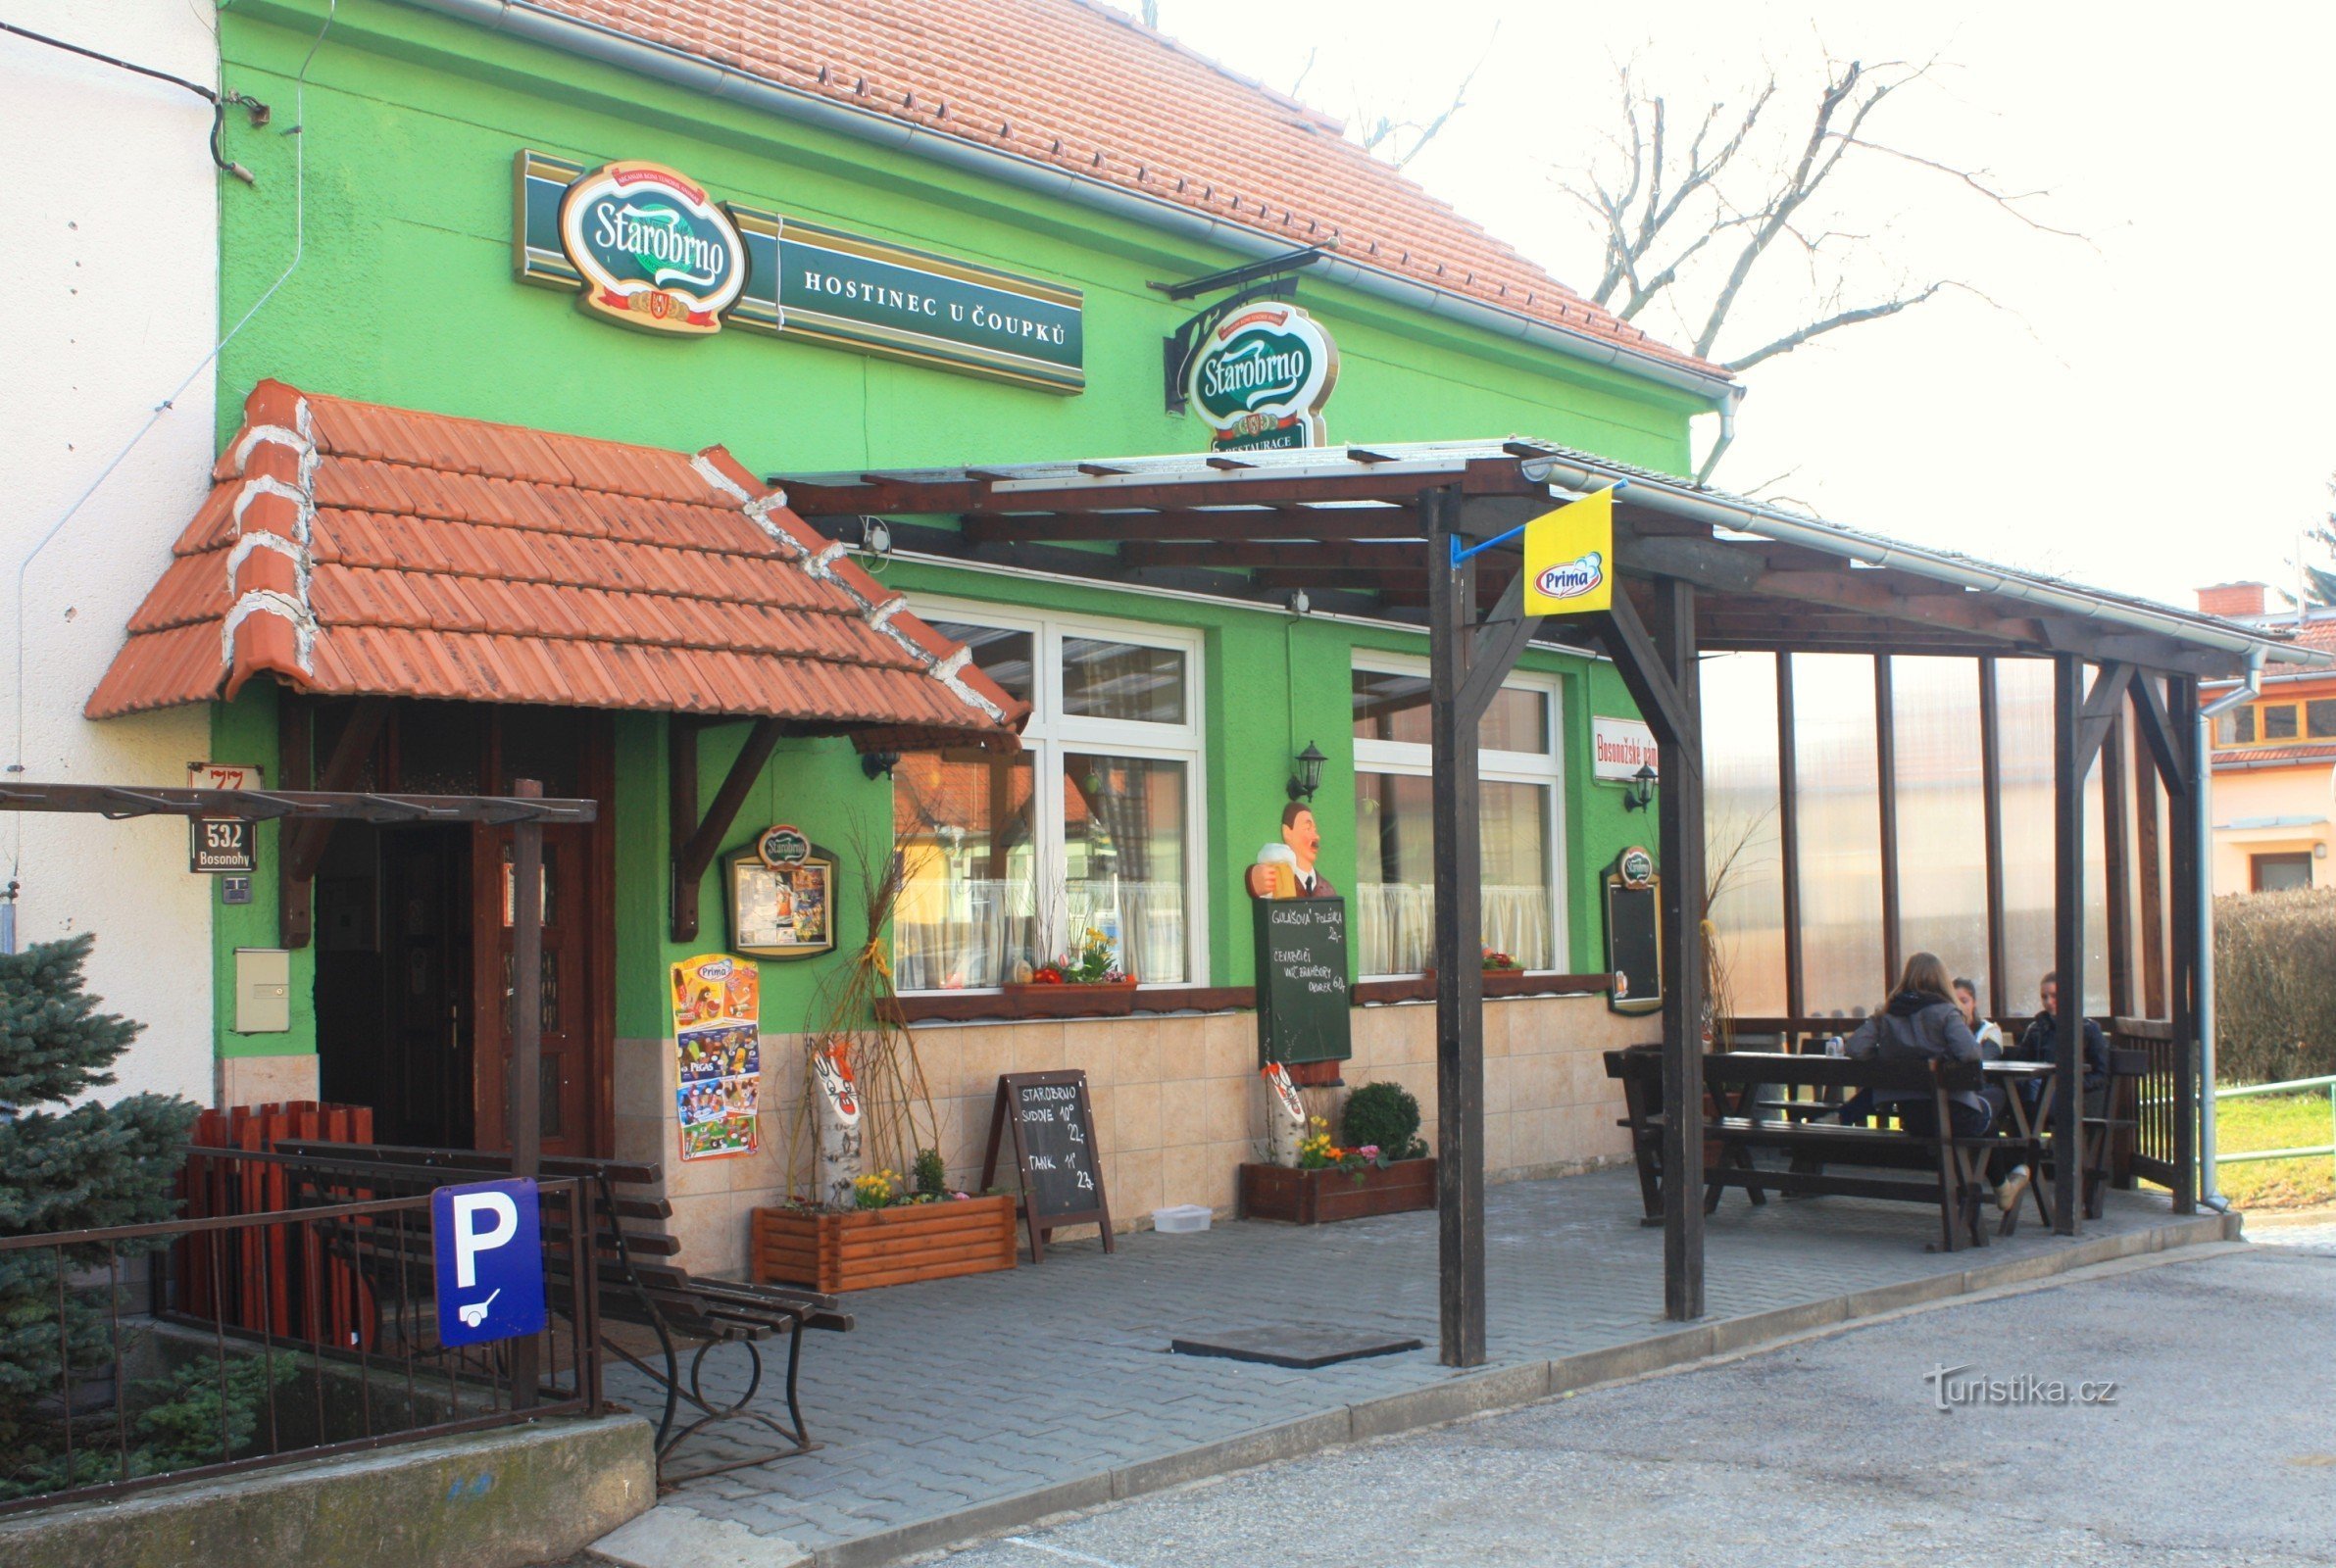 Brno-Bosonohy - quán trọ U Čoupků